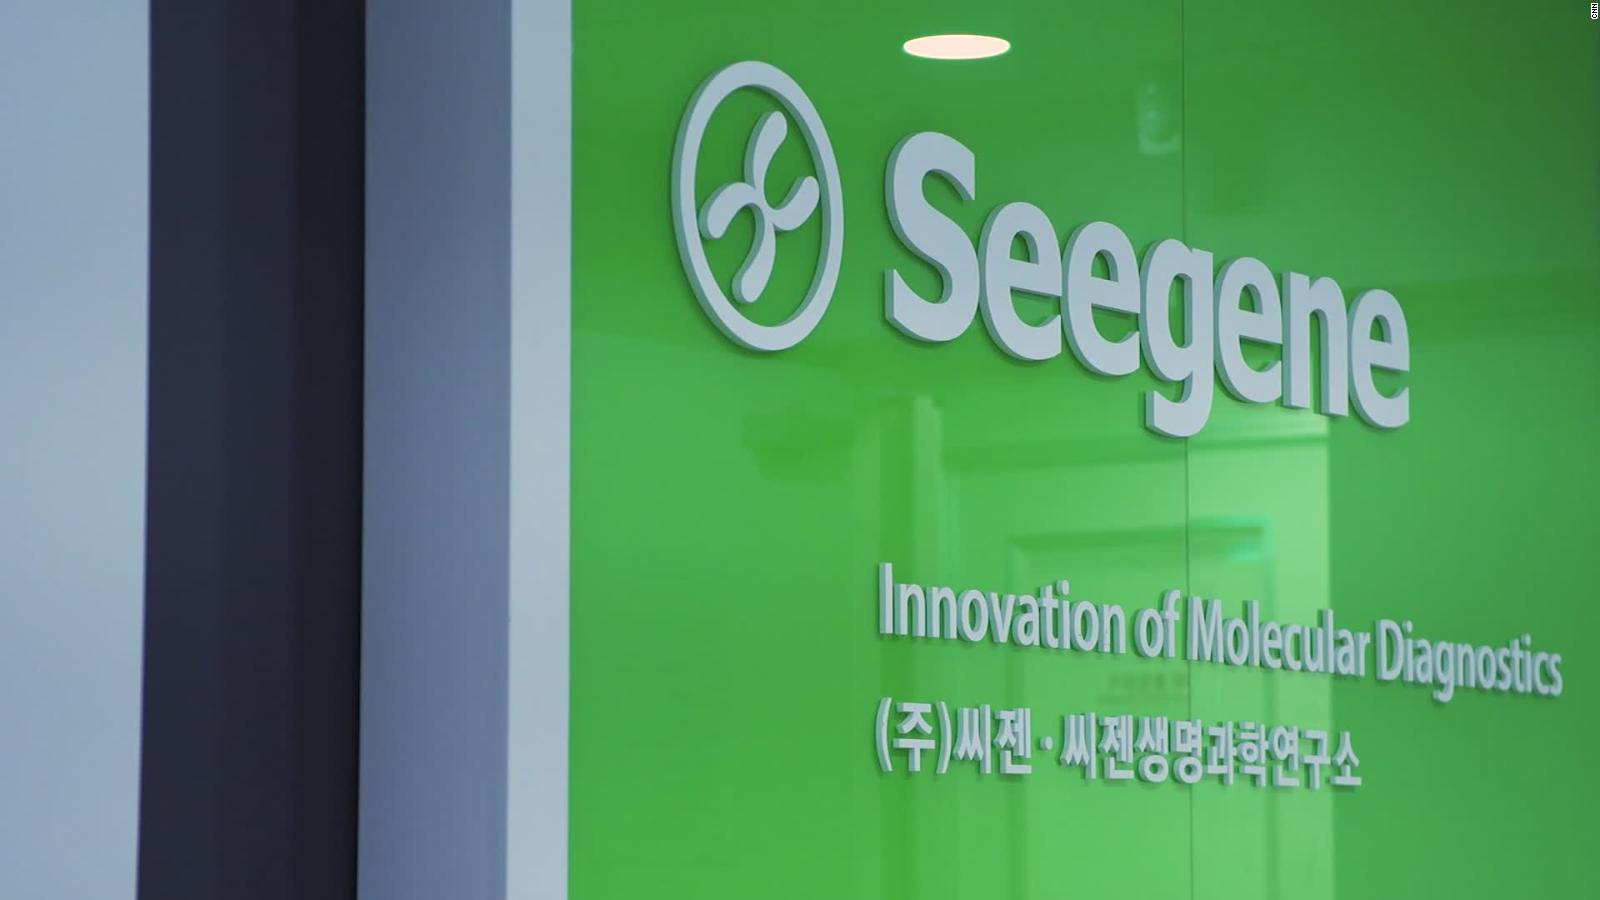 Seegene exportó 10 millones de tests de diagnóstico de COVID-19 a más de 60 países